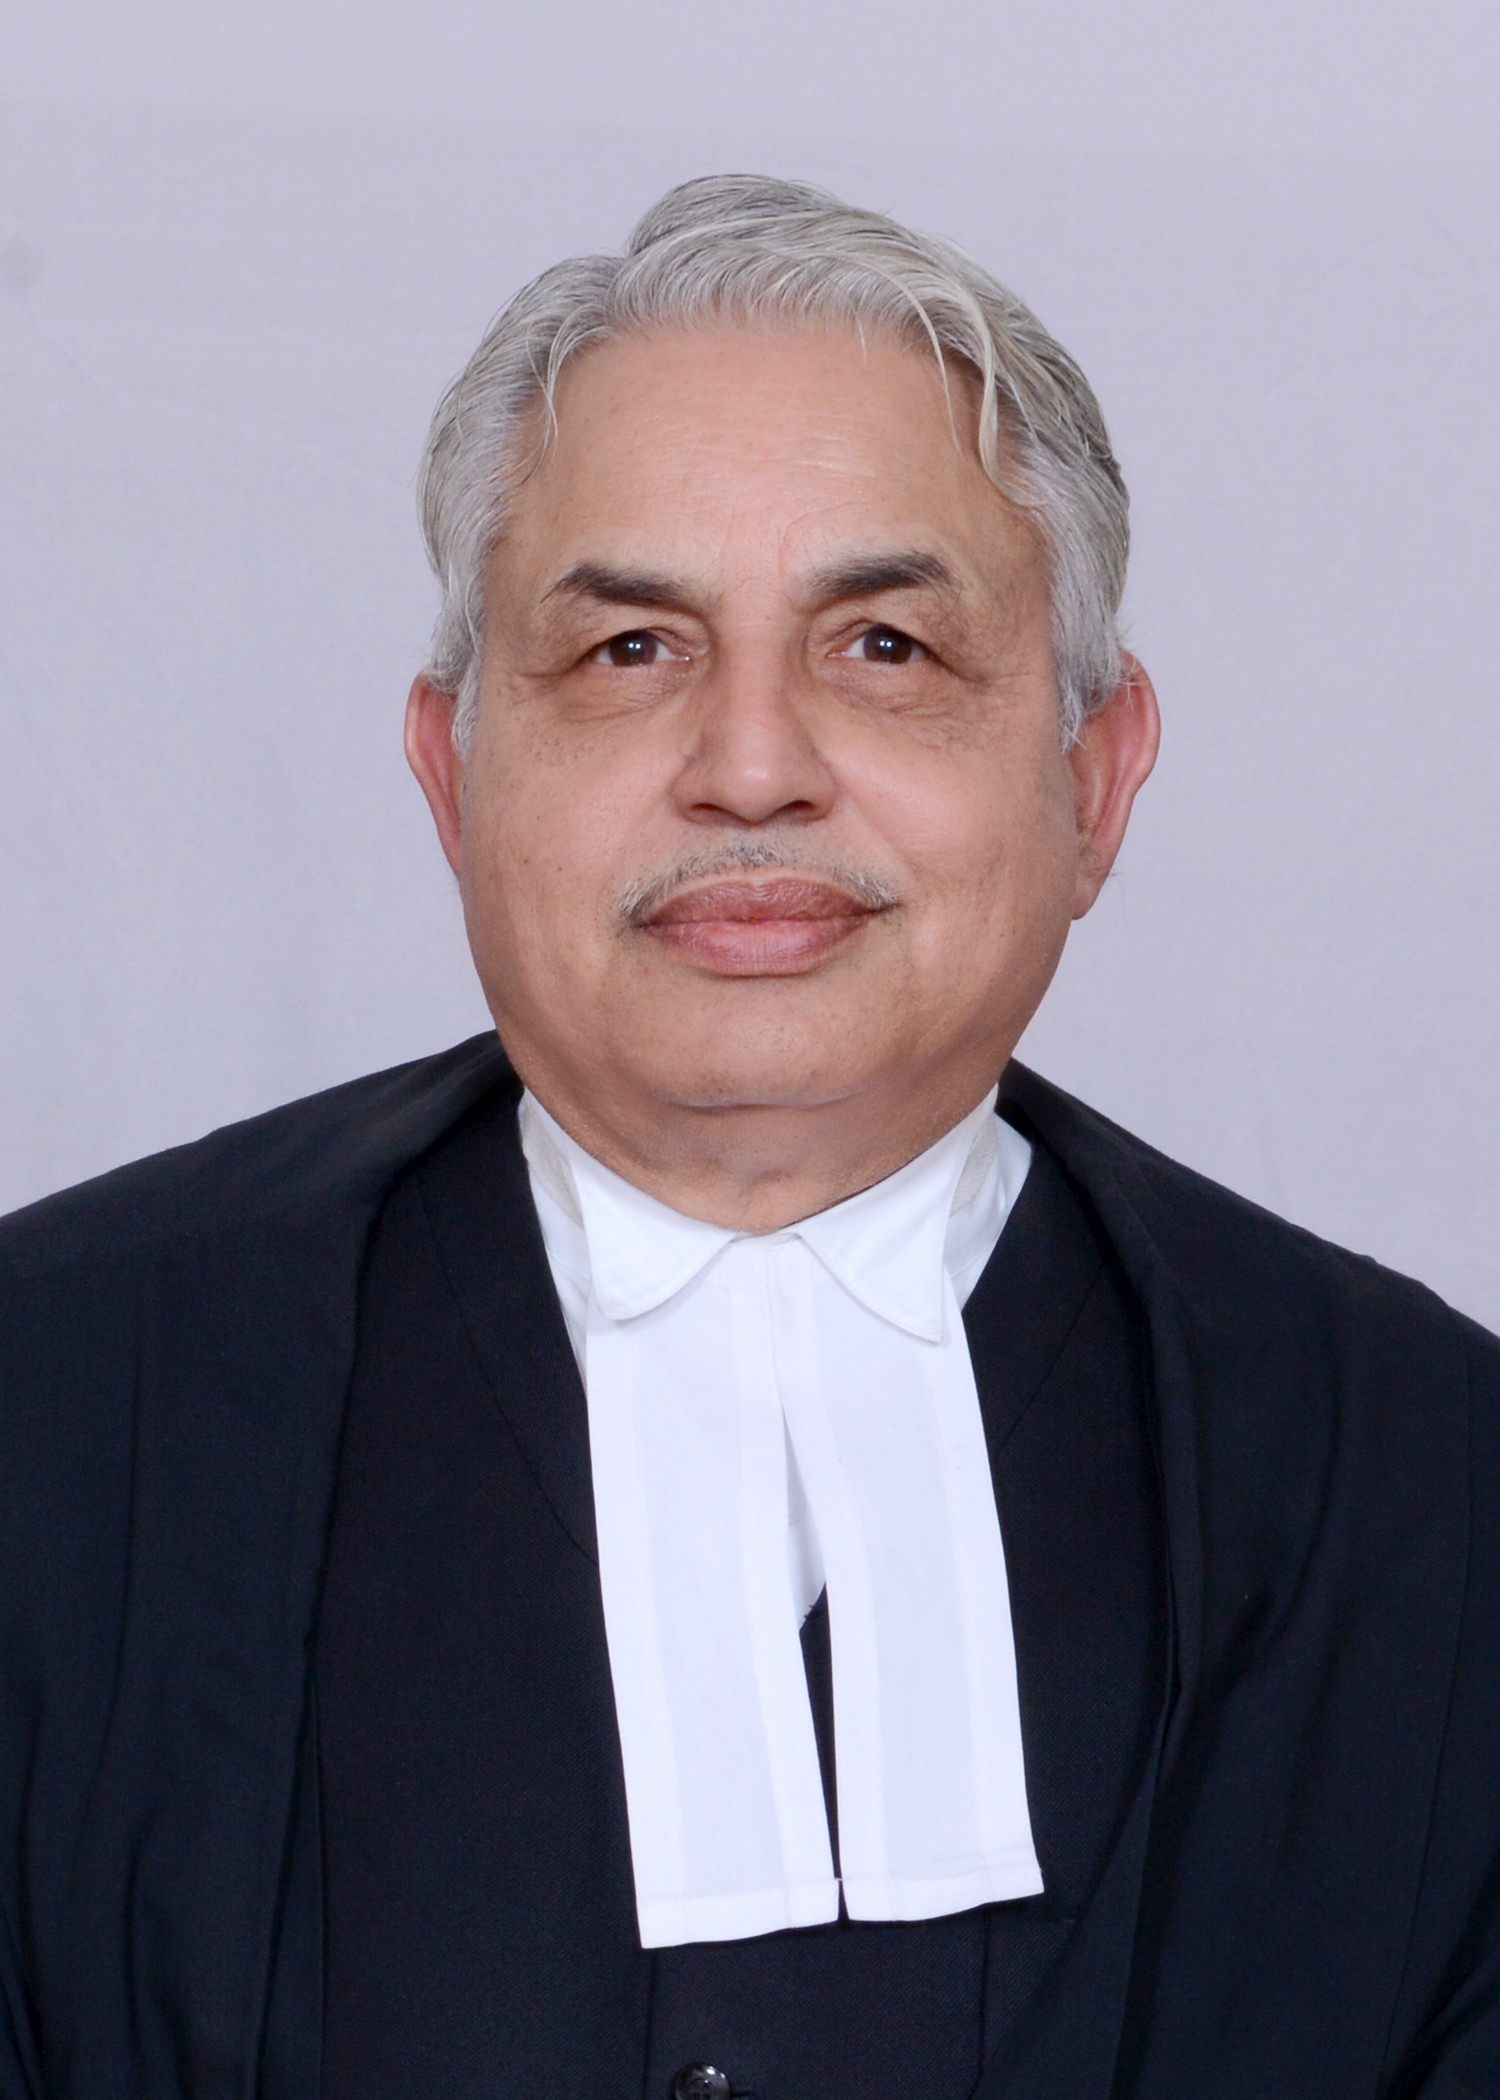 Hon’ble Mr. Justice Vimlesh Kumar Shukla (Sr. Judge, Alld.)